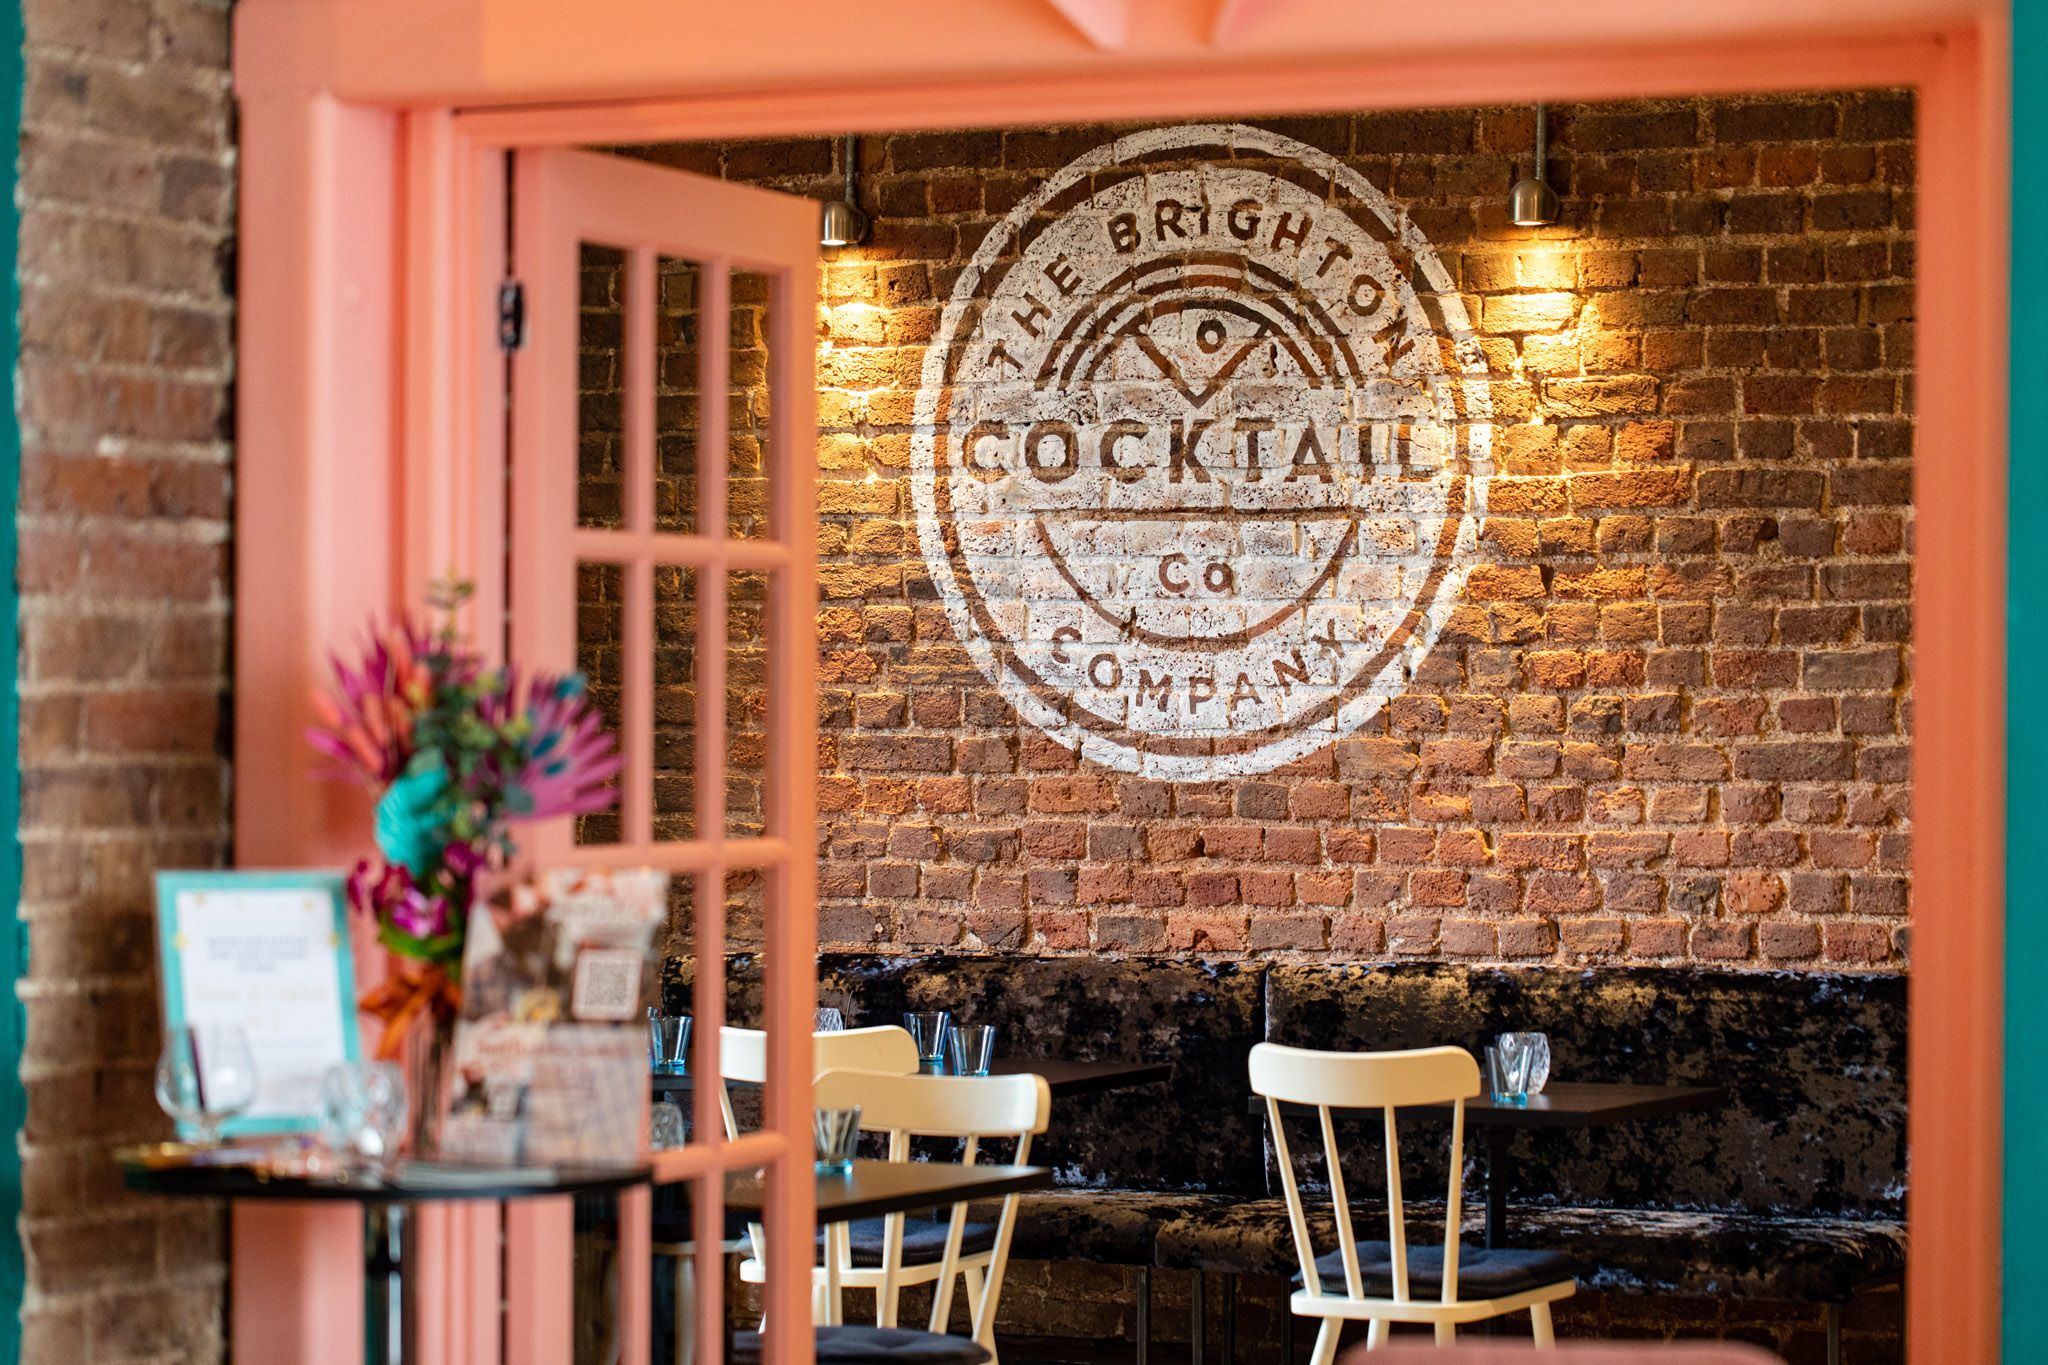 shot of Brighton Cocktail Company white logo on the orange brick wall